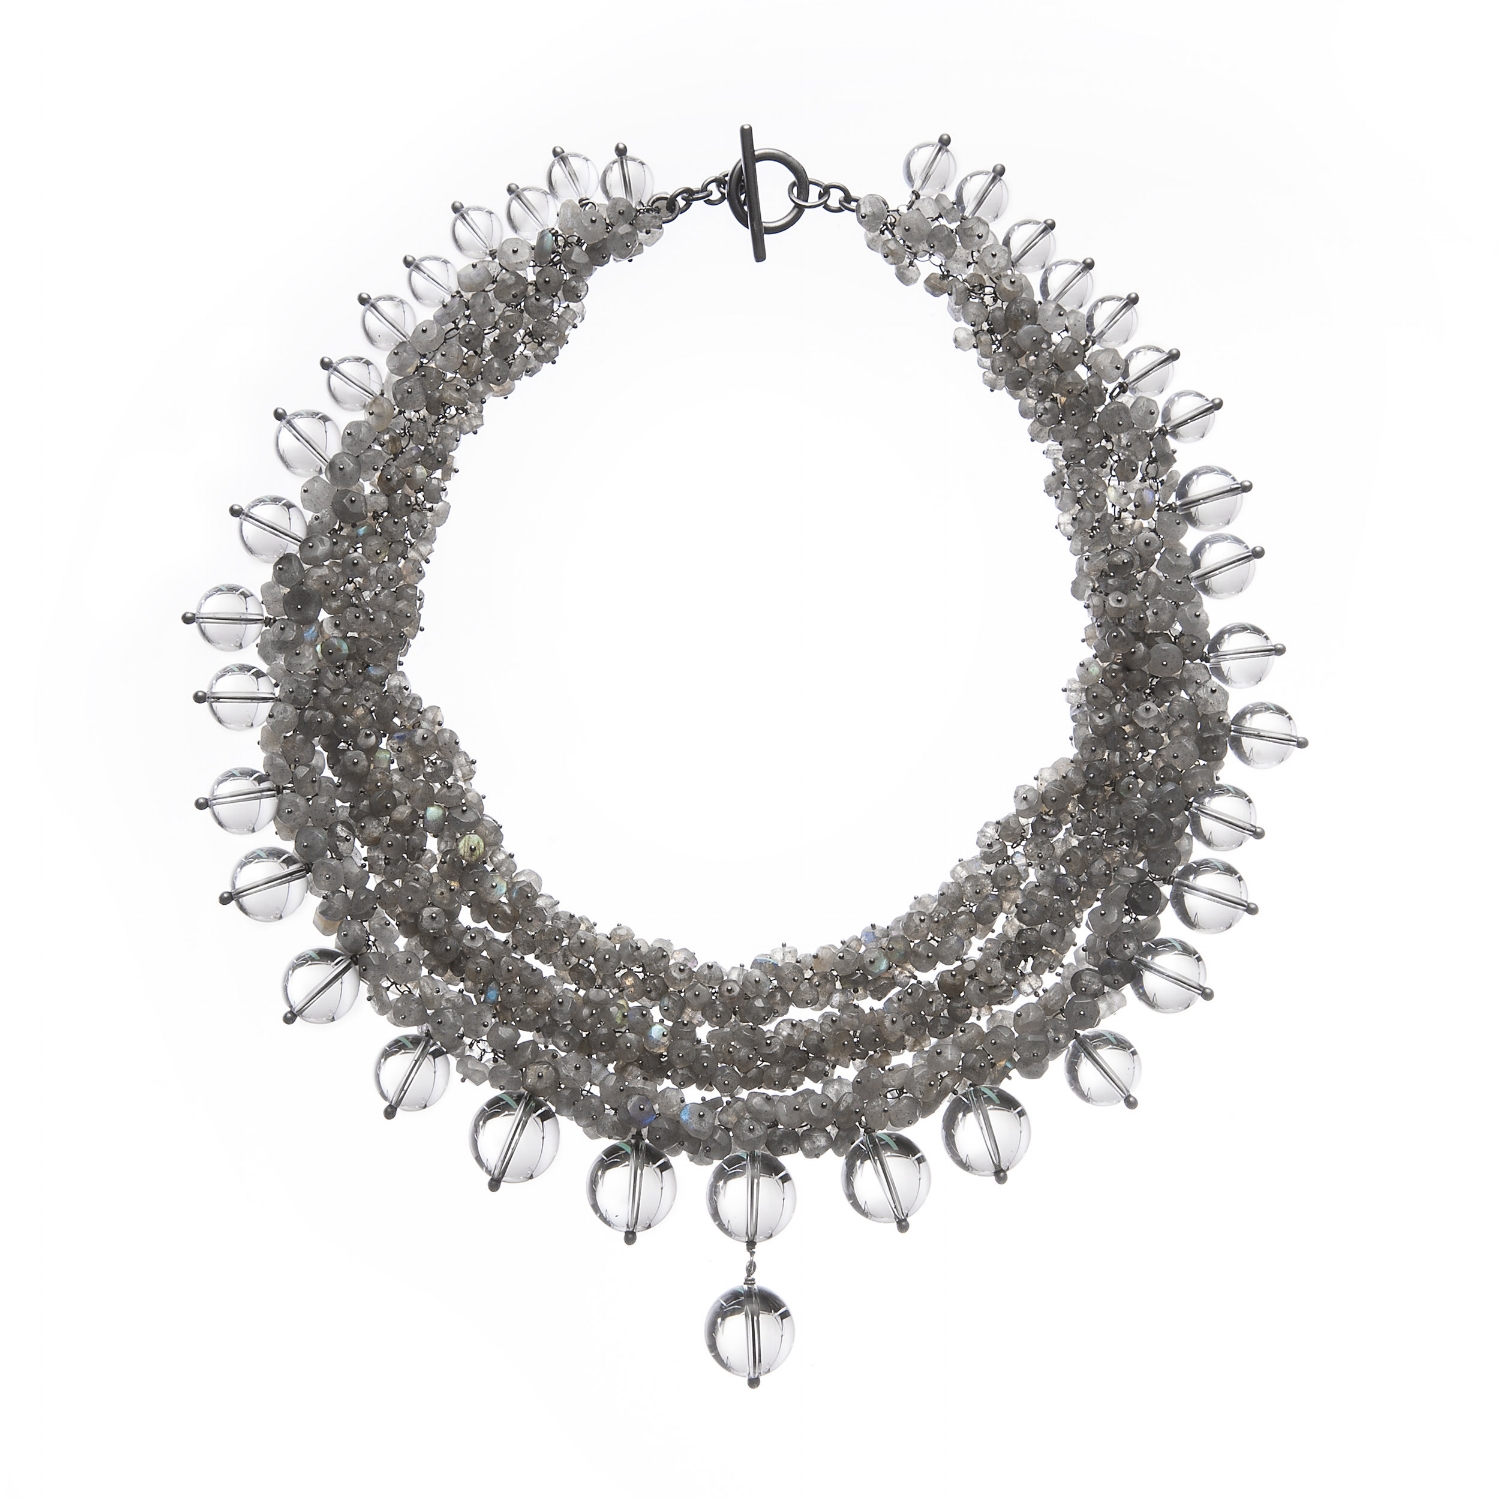 Michelle Pajak-Reynolds Undina Collection Luna necklace